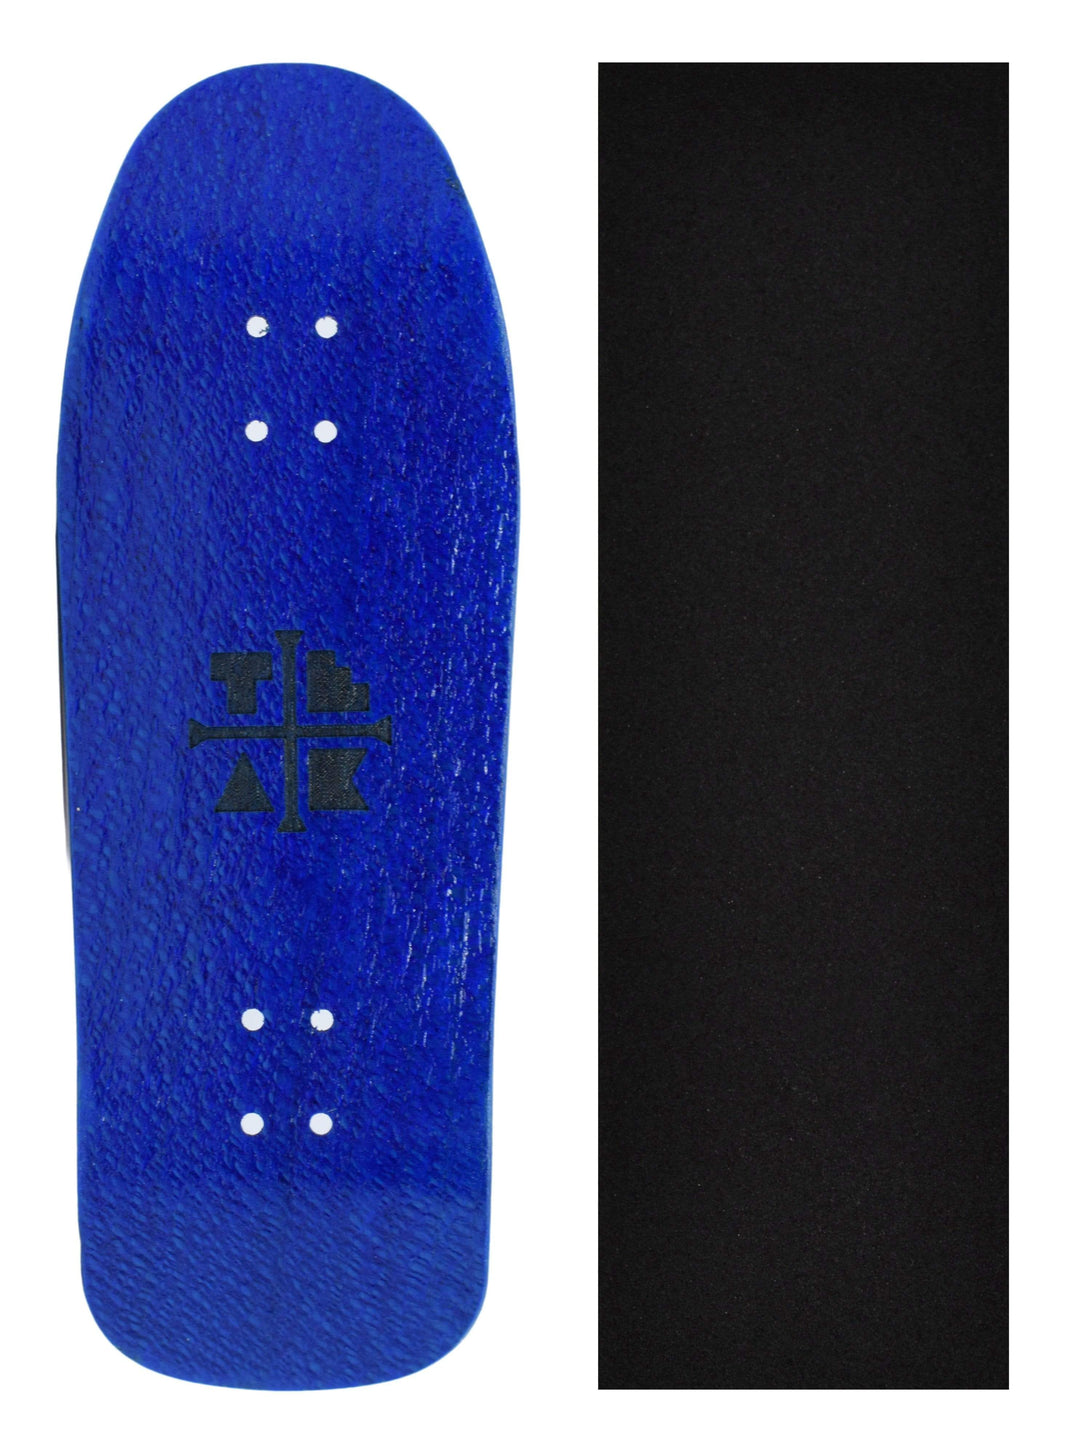 Teak Tuning Carlsbad Cruiser Wooden Fingerboard Deck, "Blue Yeti" - 34mm x 100mm